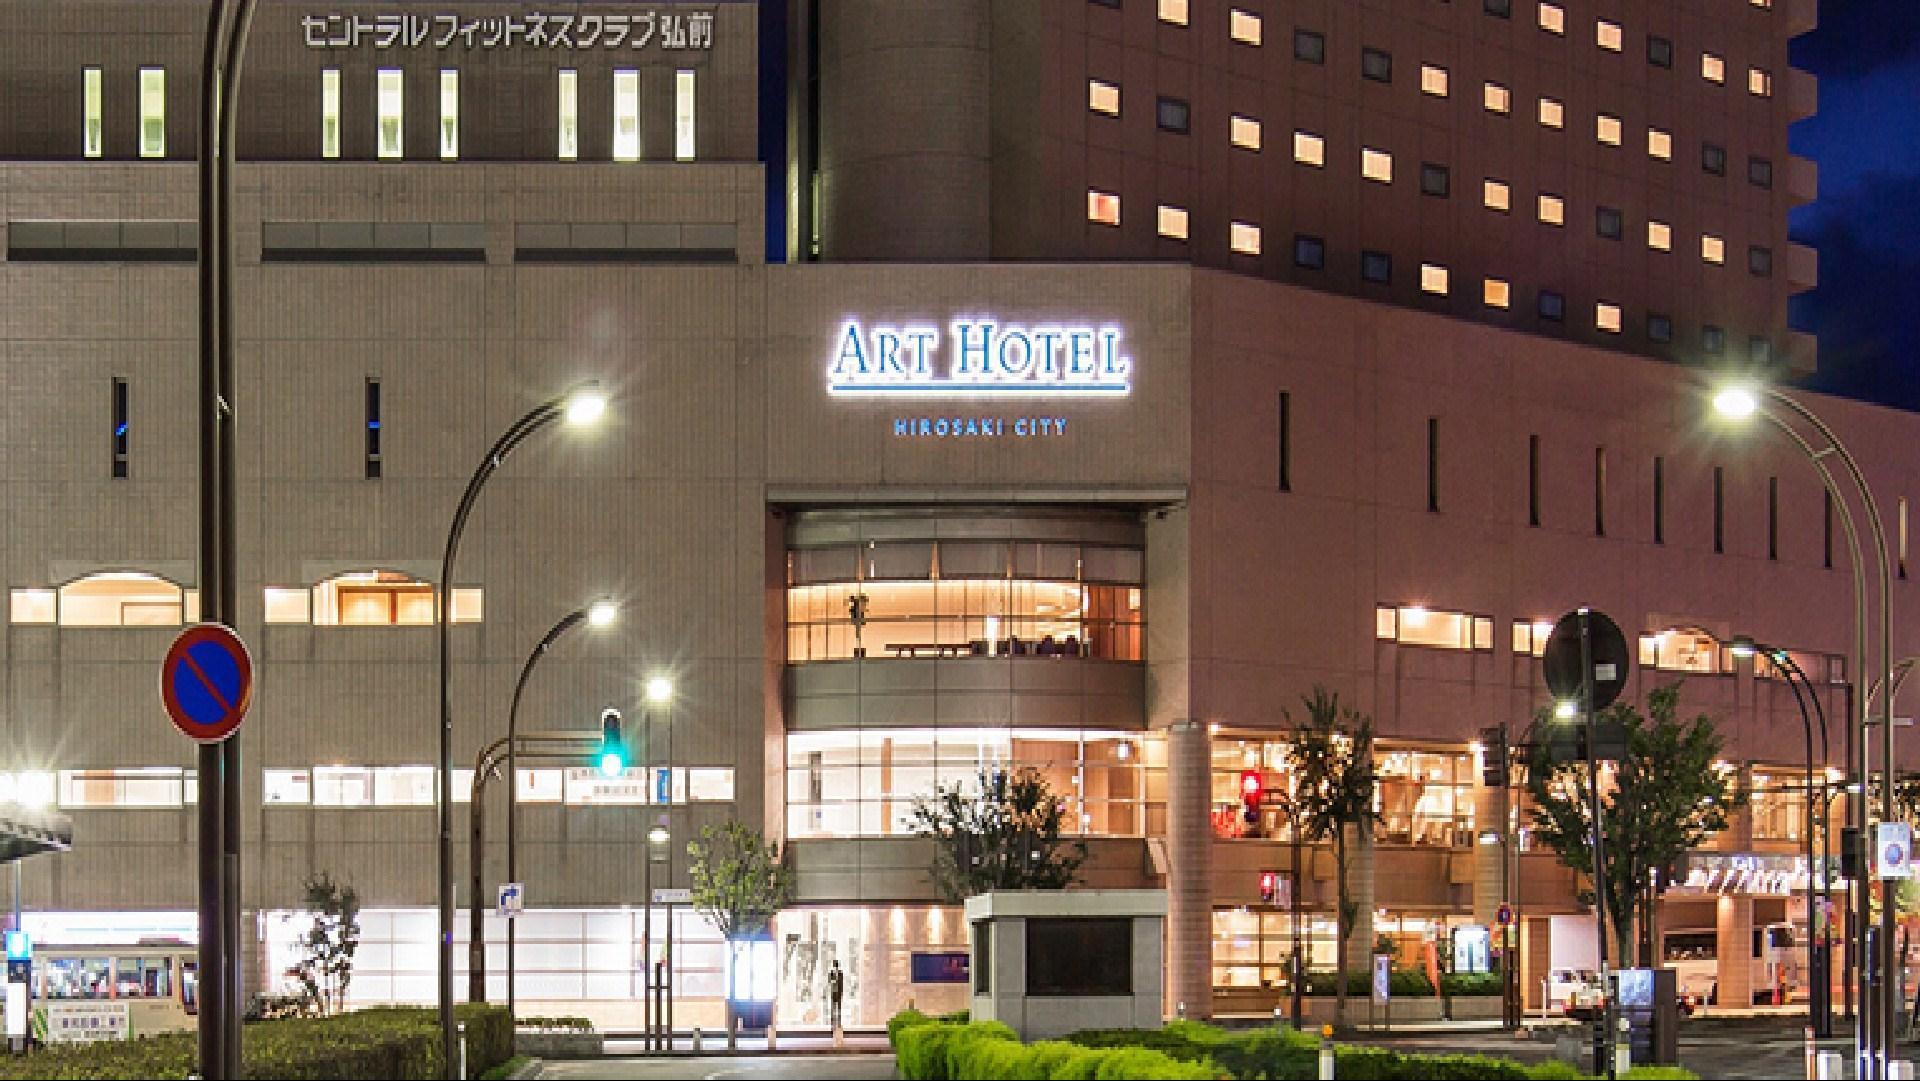 Art Hotel Hirosaki City in Aomori, JP